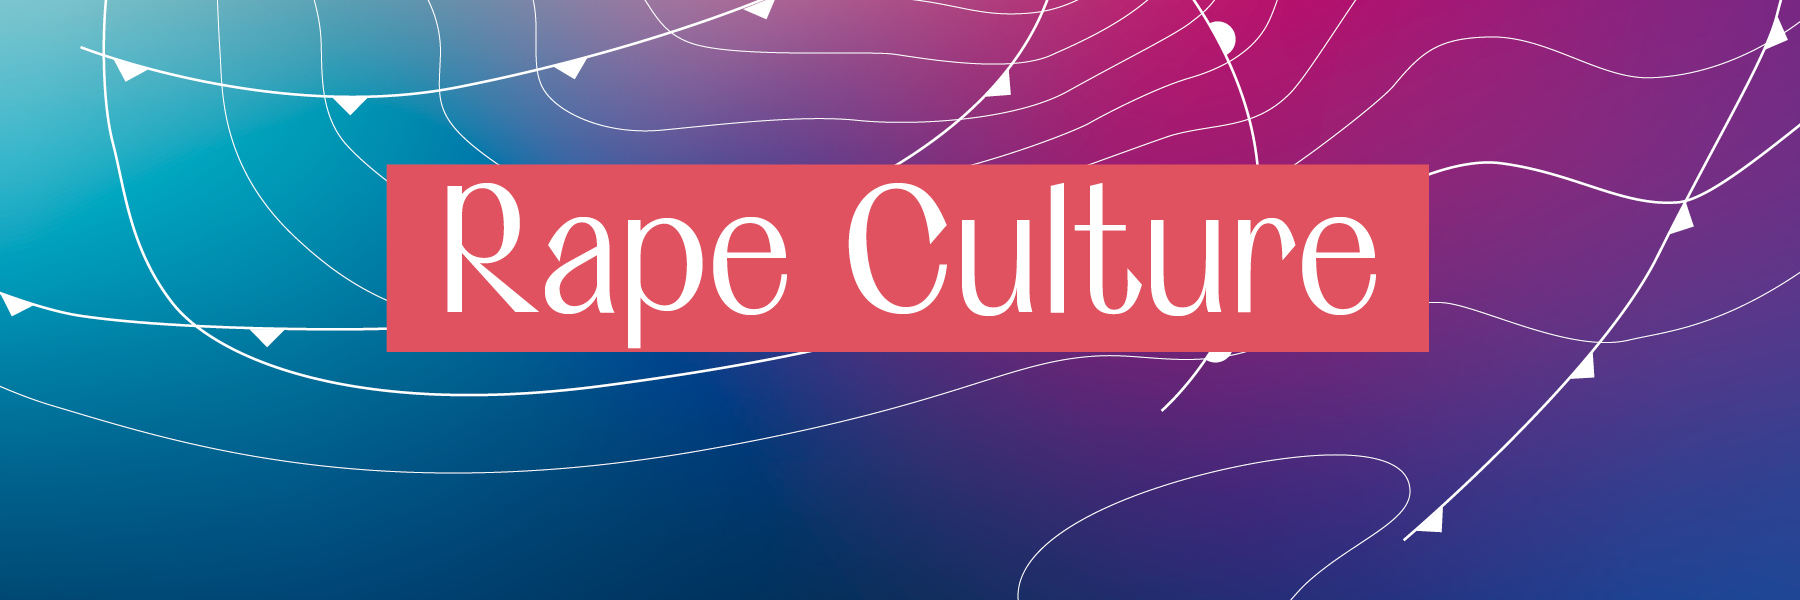 FES Gender Glossar - Rape Culture